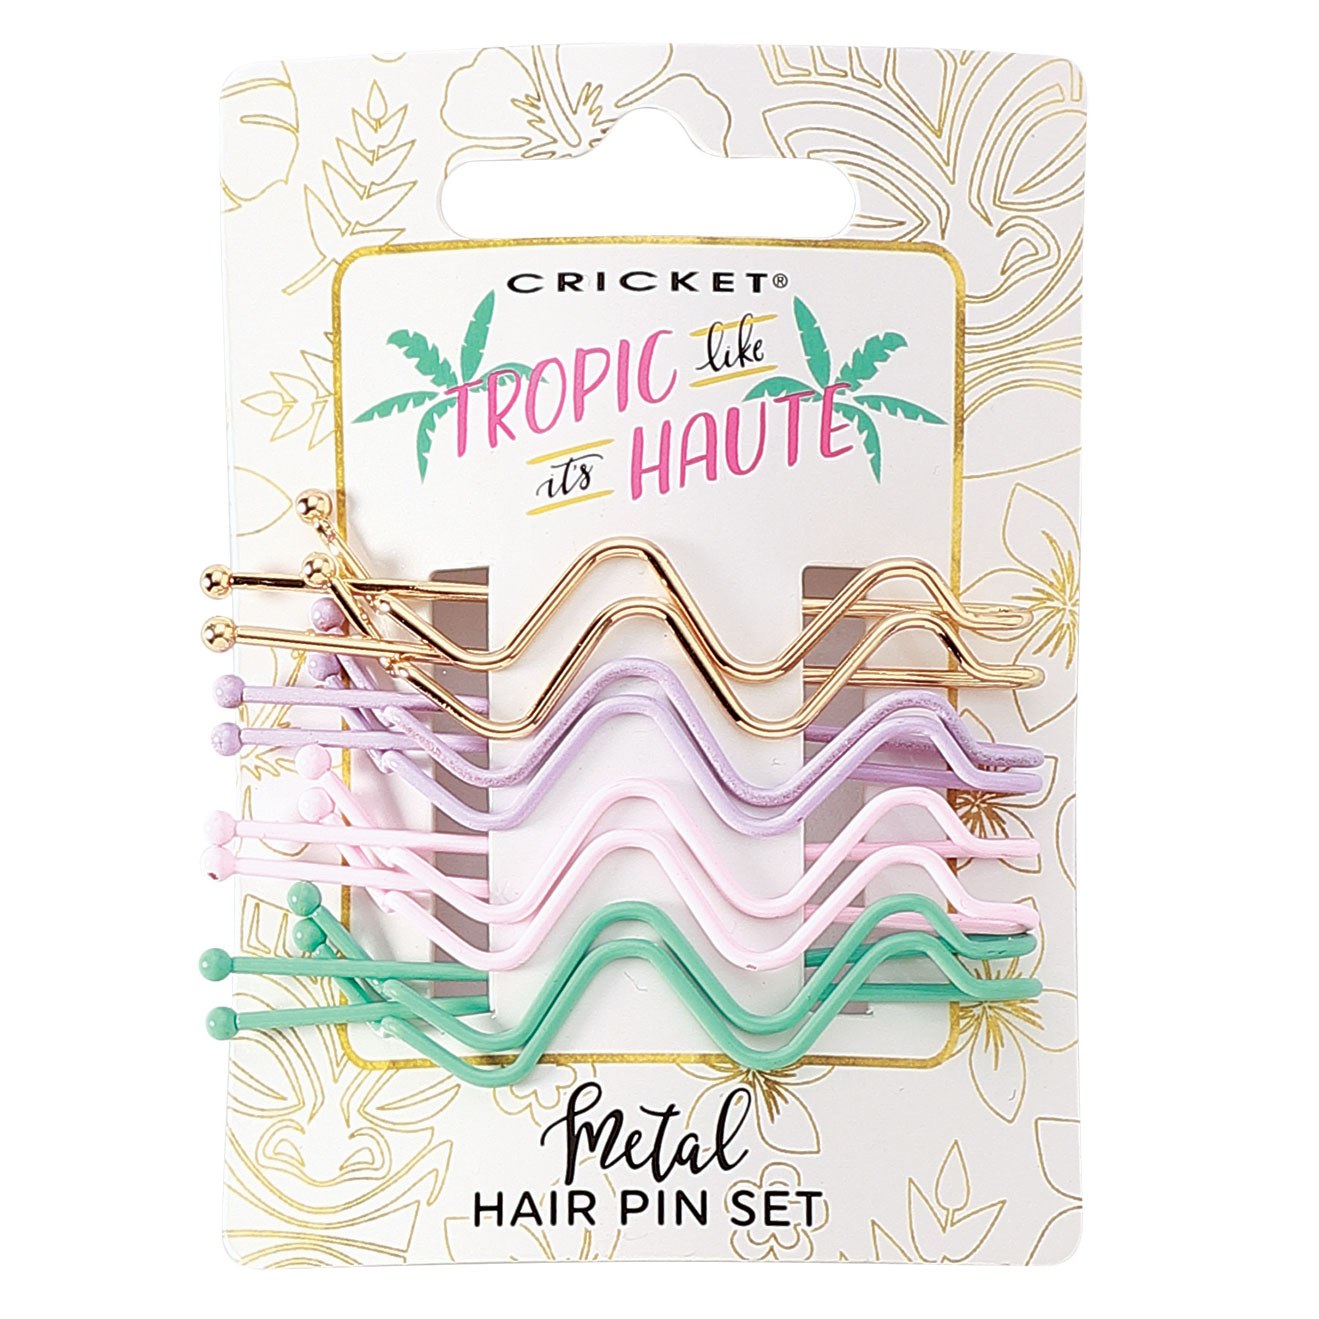 Cricket Tropic Like It's Haute: Metal Hair Pin Set